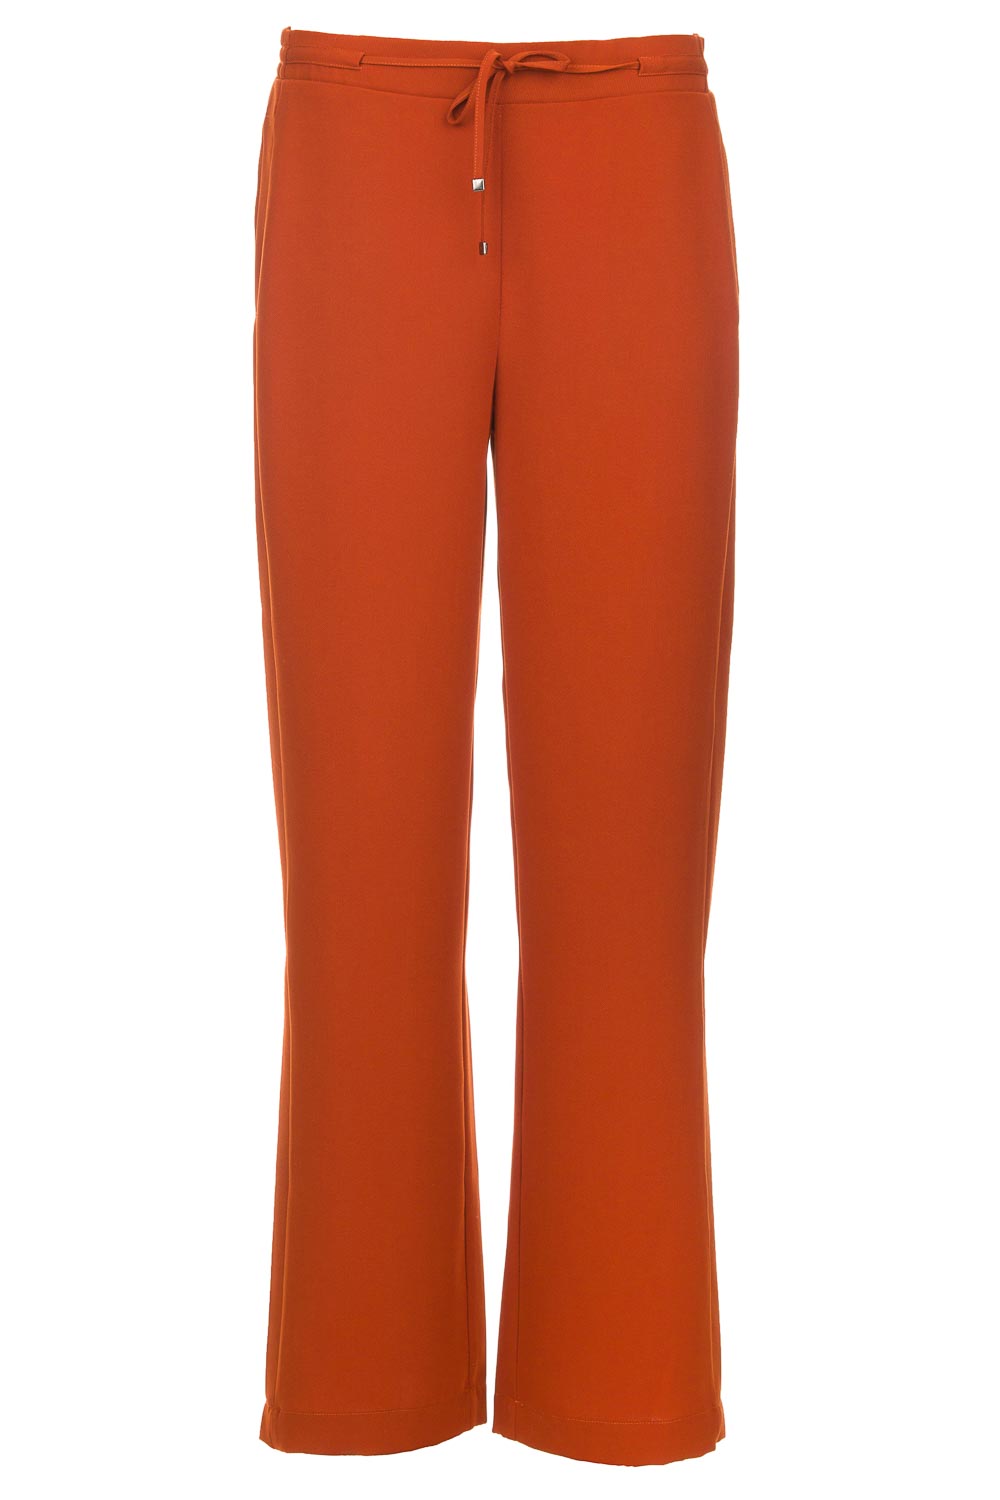 Dante 6 Pantalon met trekkoord Noraly oranje